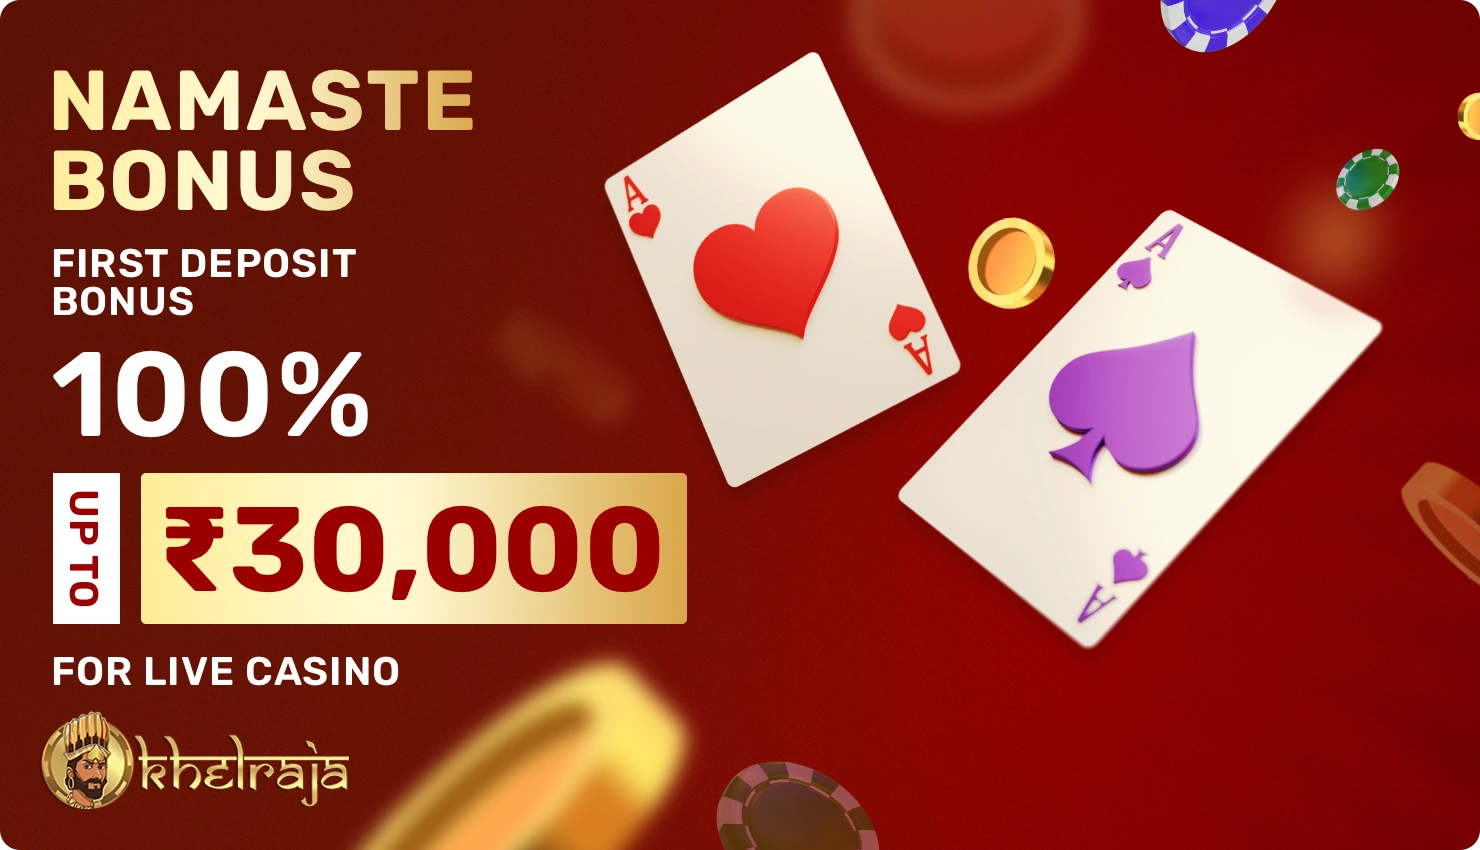 Namaste bonus - allows you to get a bonus at Khelraja live casino